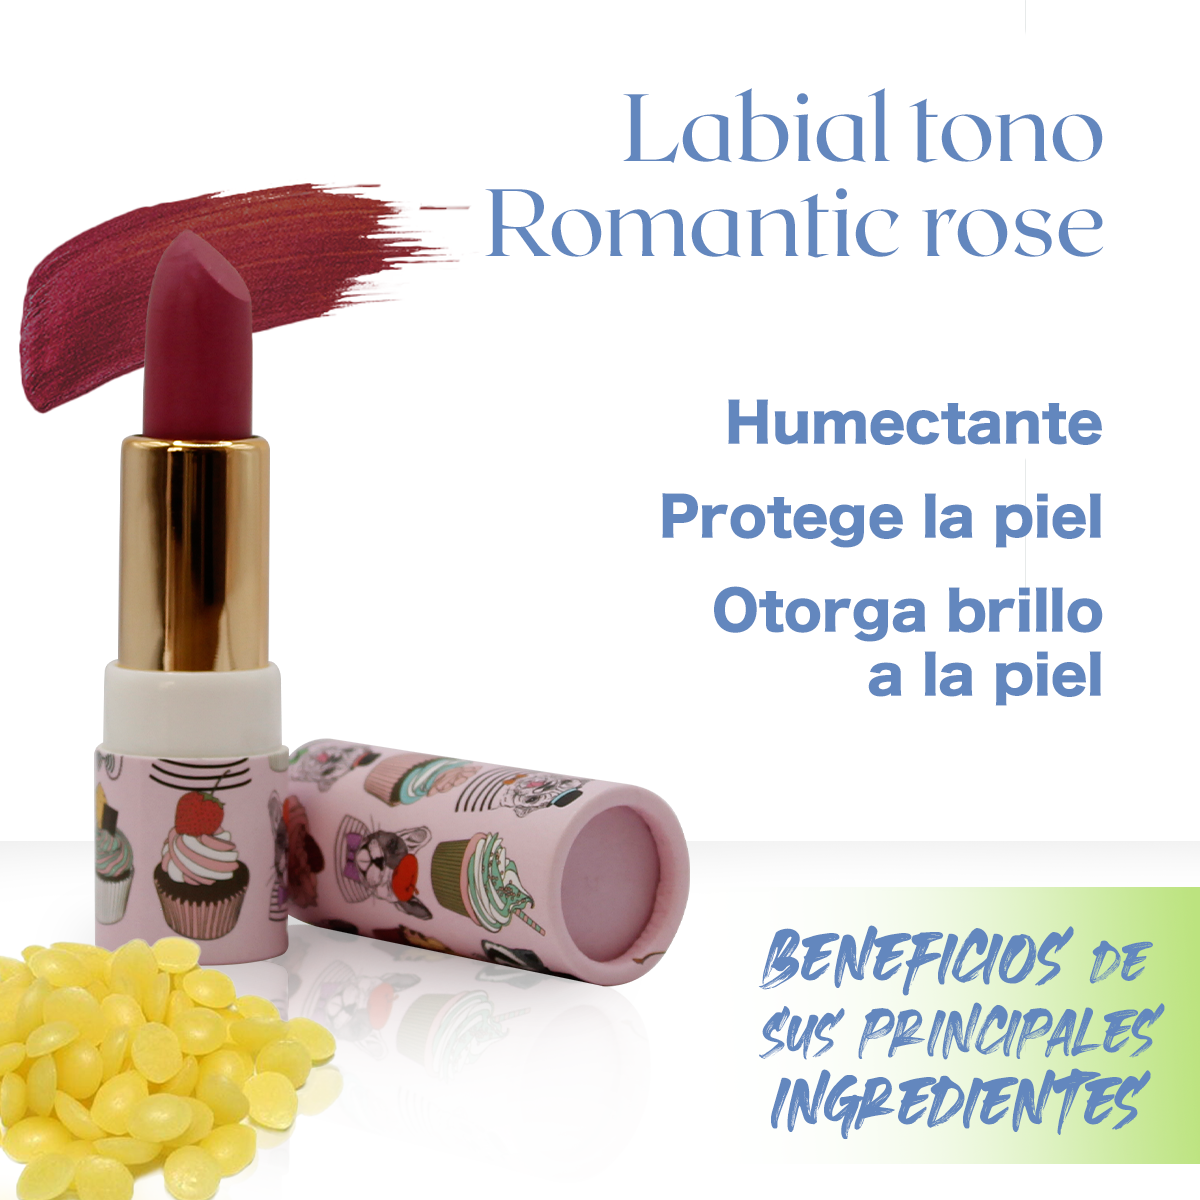 Labial hidratante natural de cera de candelilla, manteca de karite, vitamina E y pigmentos naturales 6g, Tono Romantic rose de bulldog